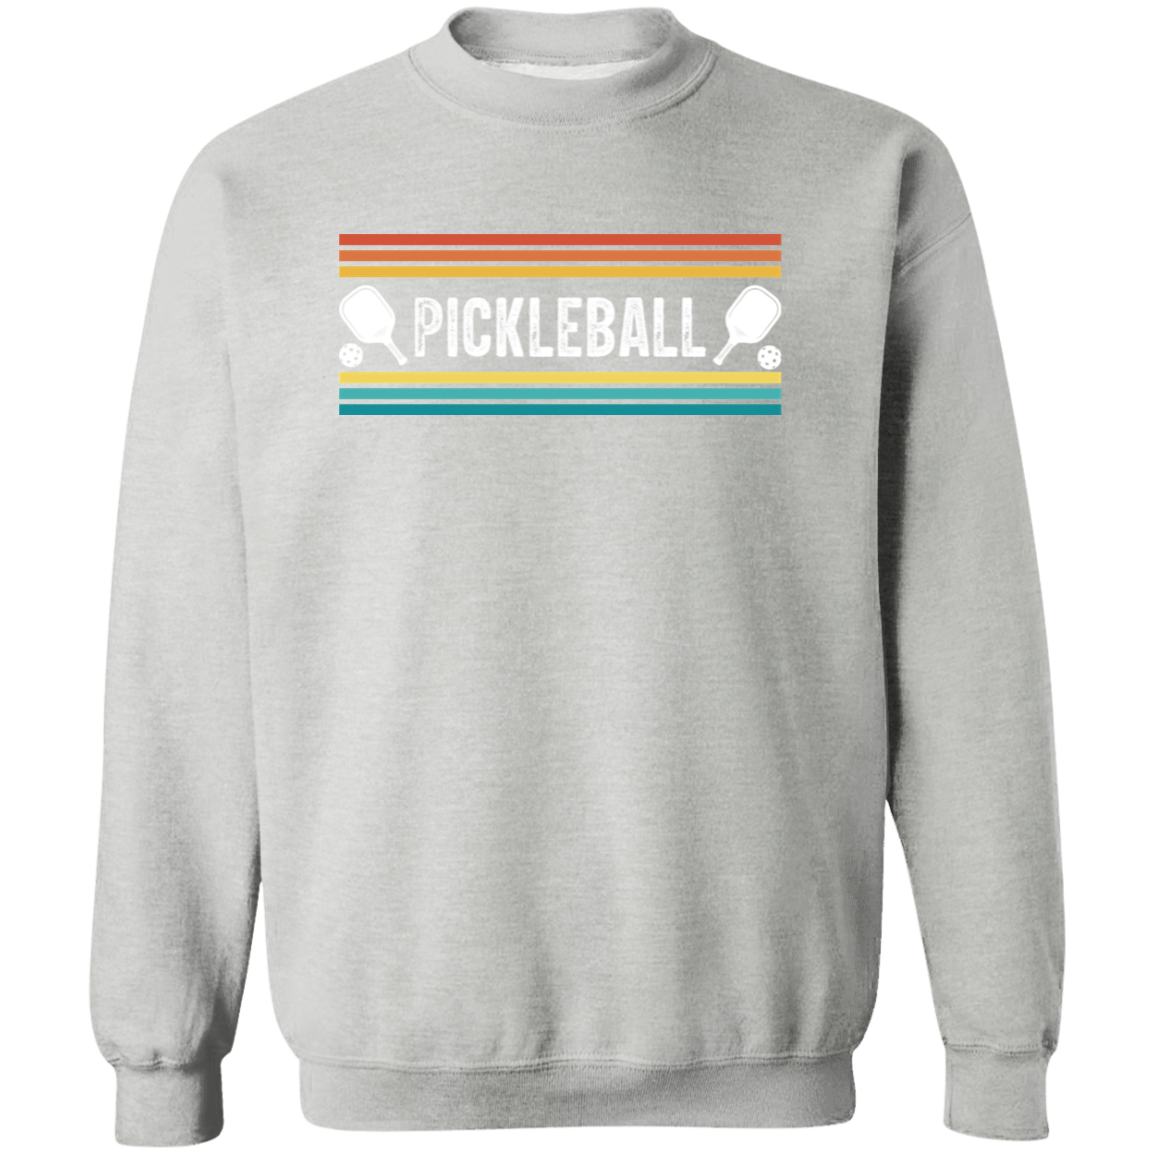 Pickleball Power Play Crewneck Pullover Sweatshirt